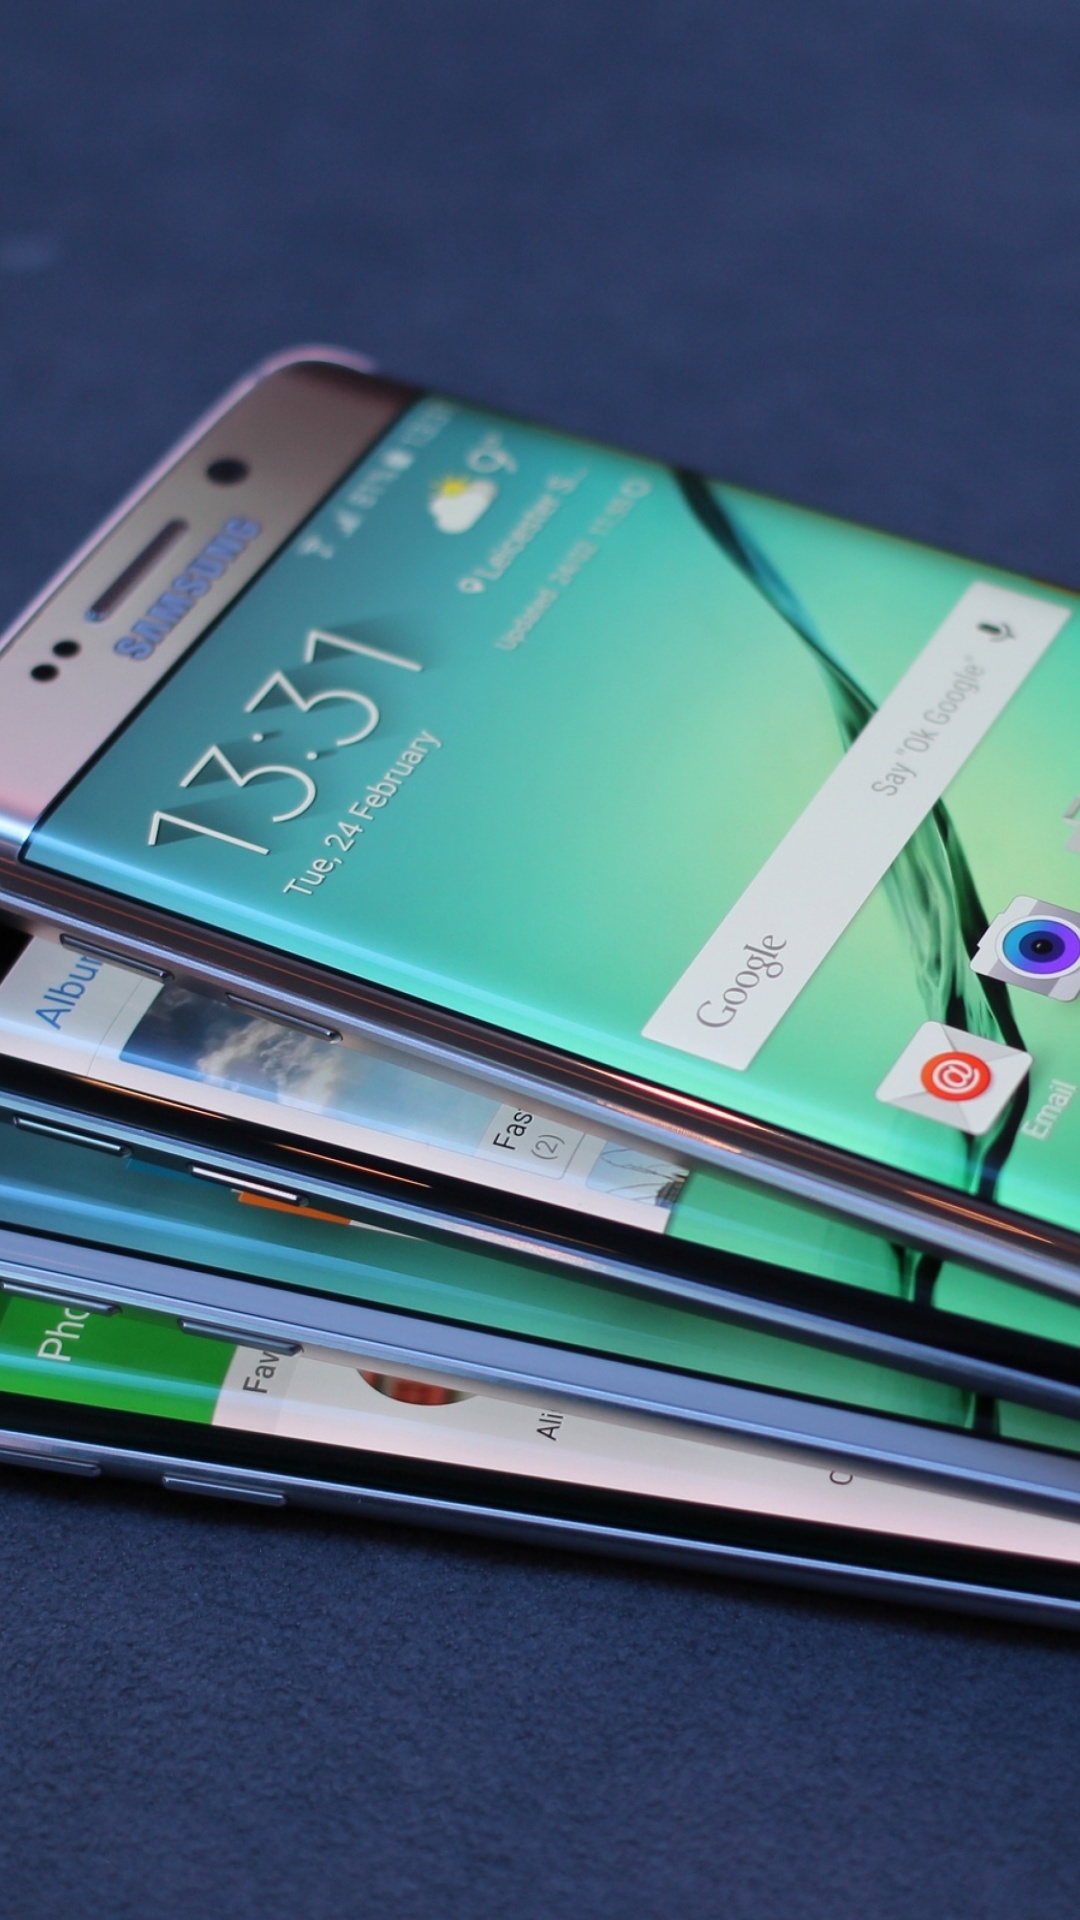 Galaxy S7 and Galaxy S7 edge from Verizon screenshot #1 1080x1920